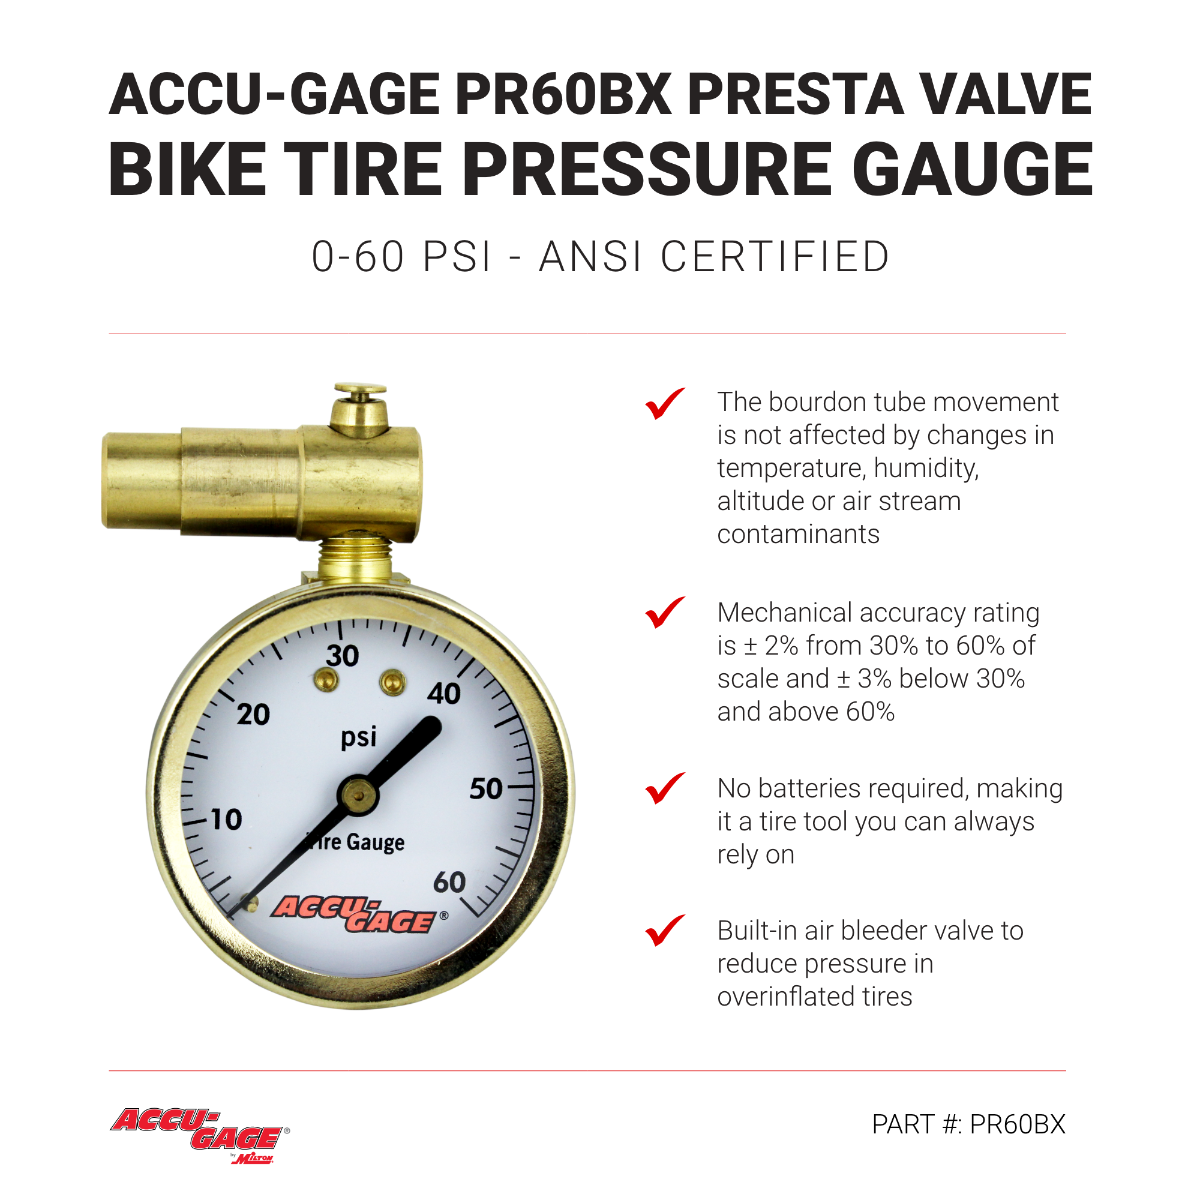 ACCU-GAGE® by Milton® Presta Valve Bike Tire Pressure Gauge with Bleeder Valve, for 0-60 PSI - ANSI Certified